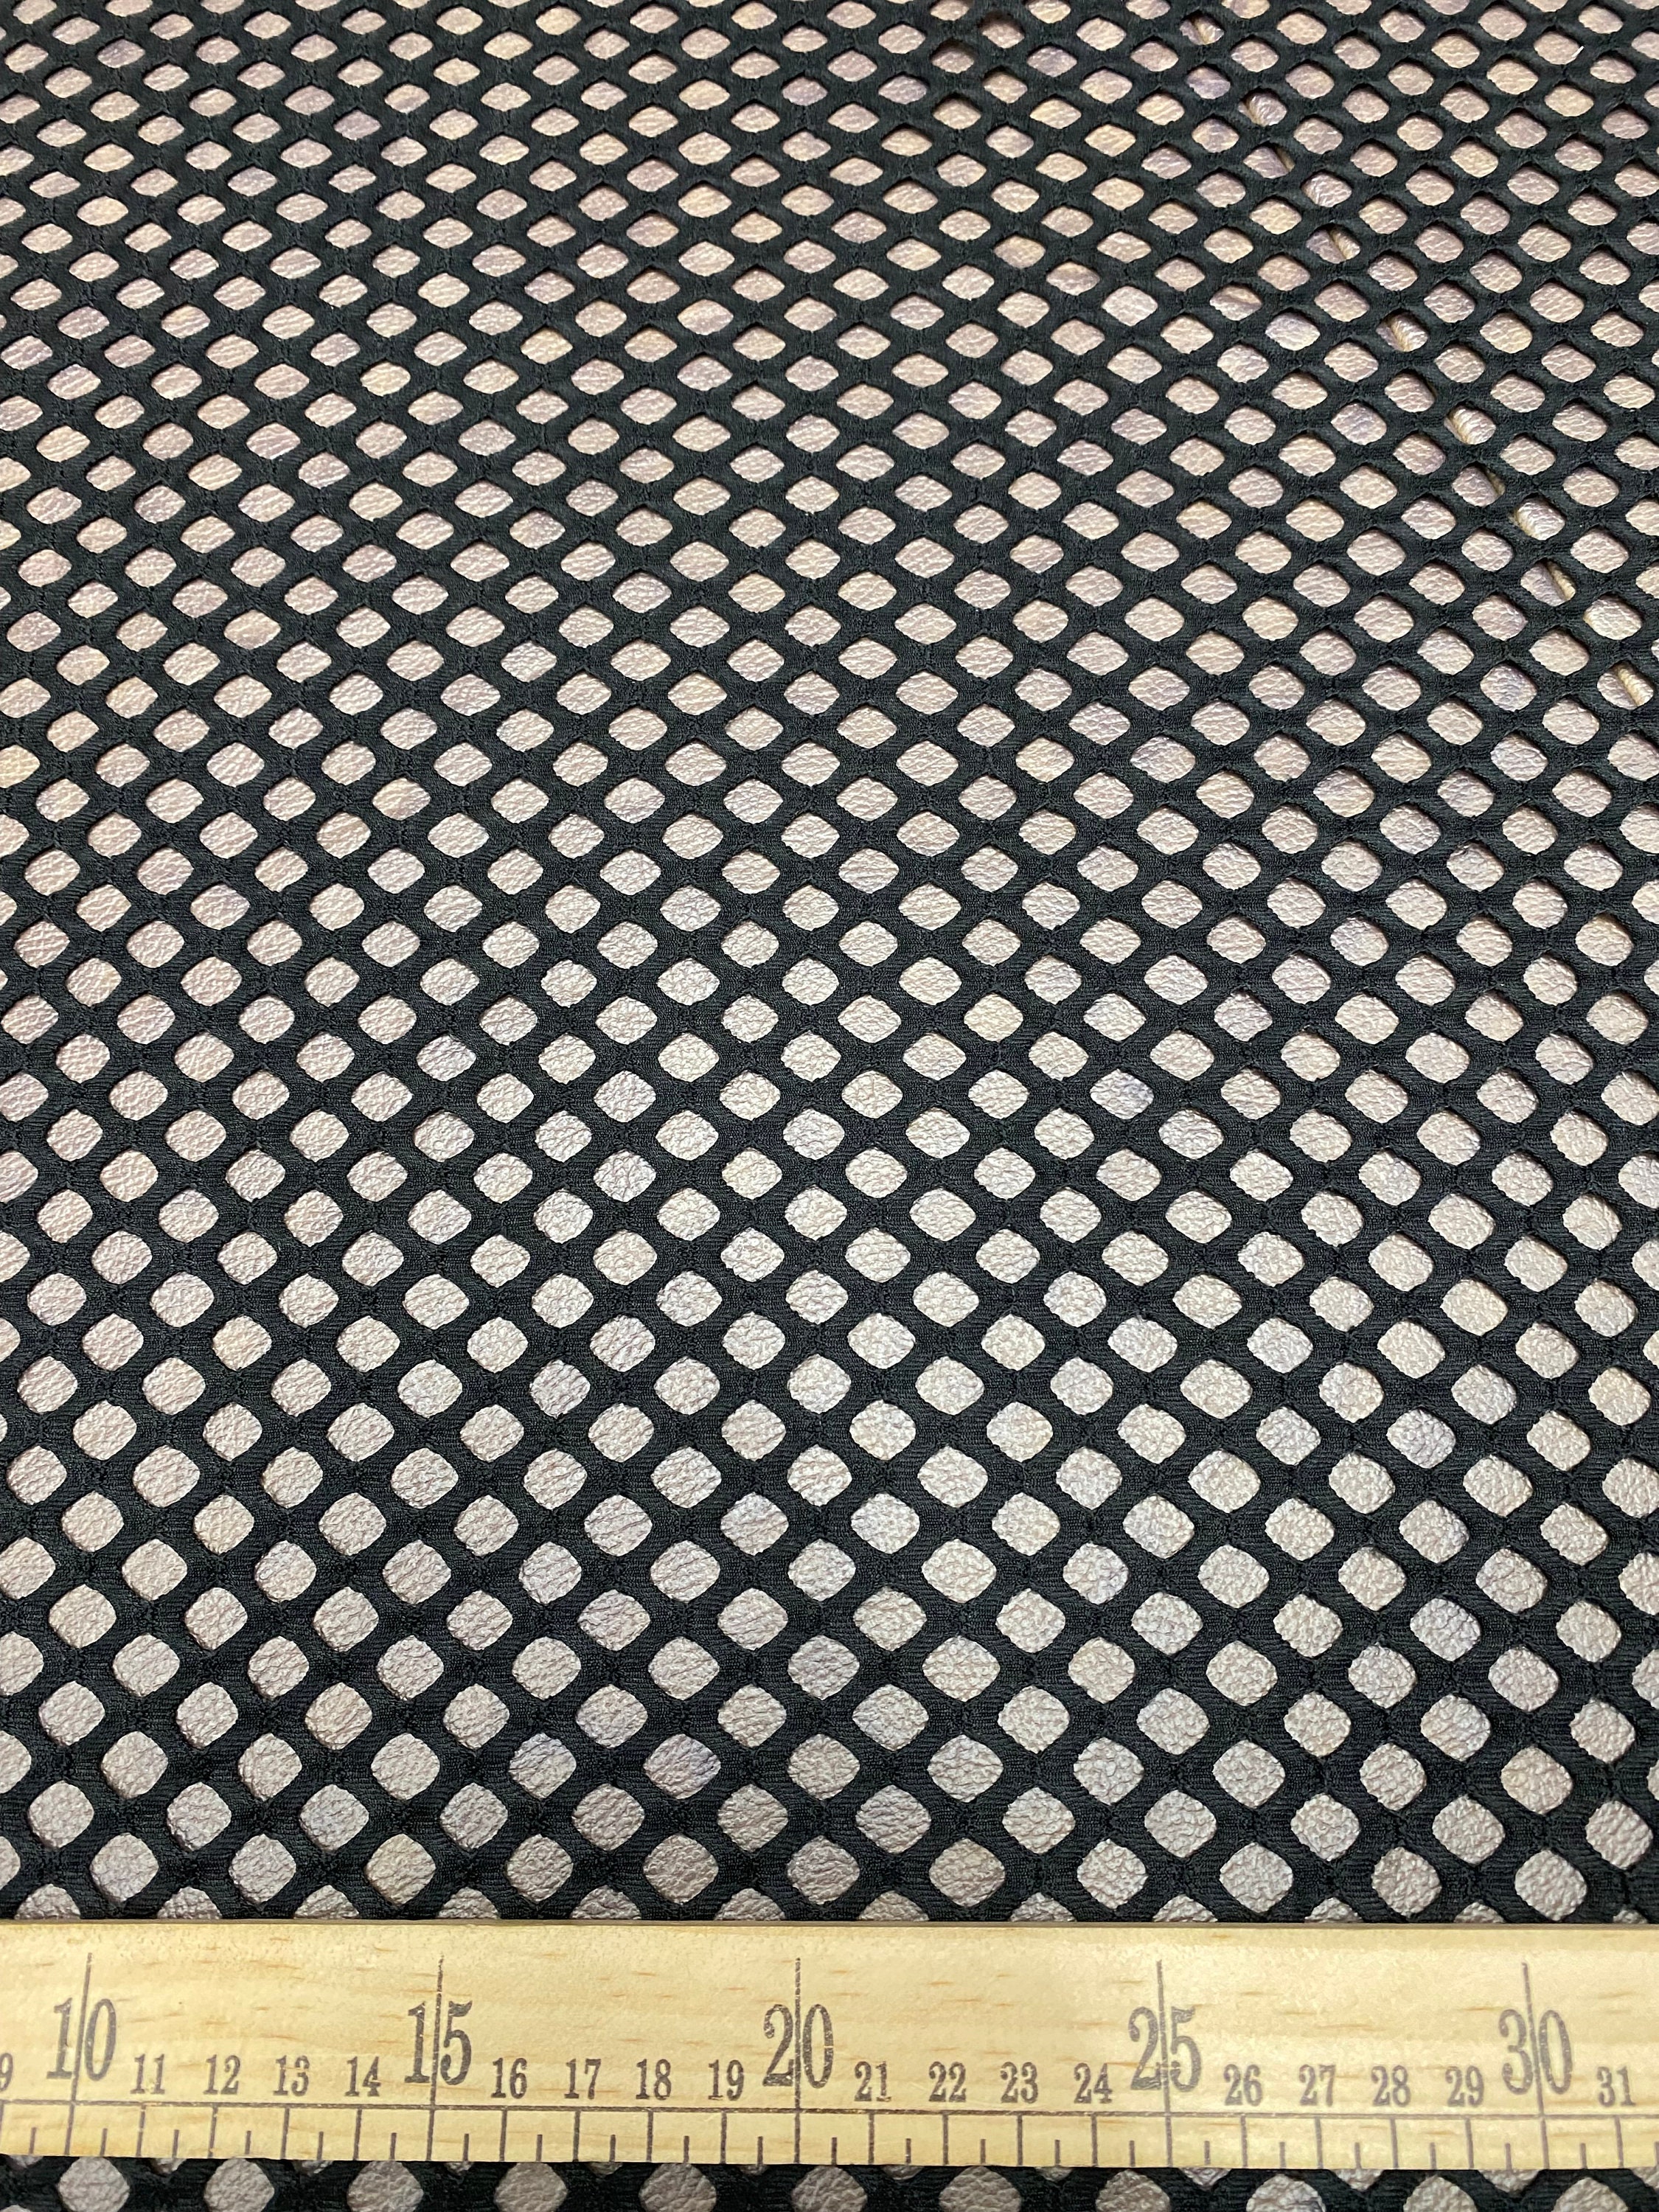 Small Micro Hole See Through Stretch Nylon Spandex Mesh Power Net Fabric  (Black)